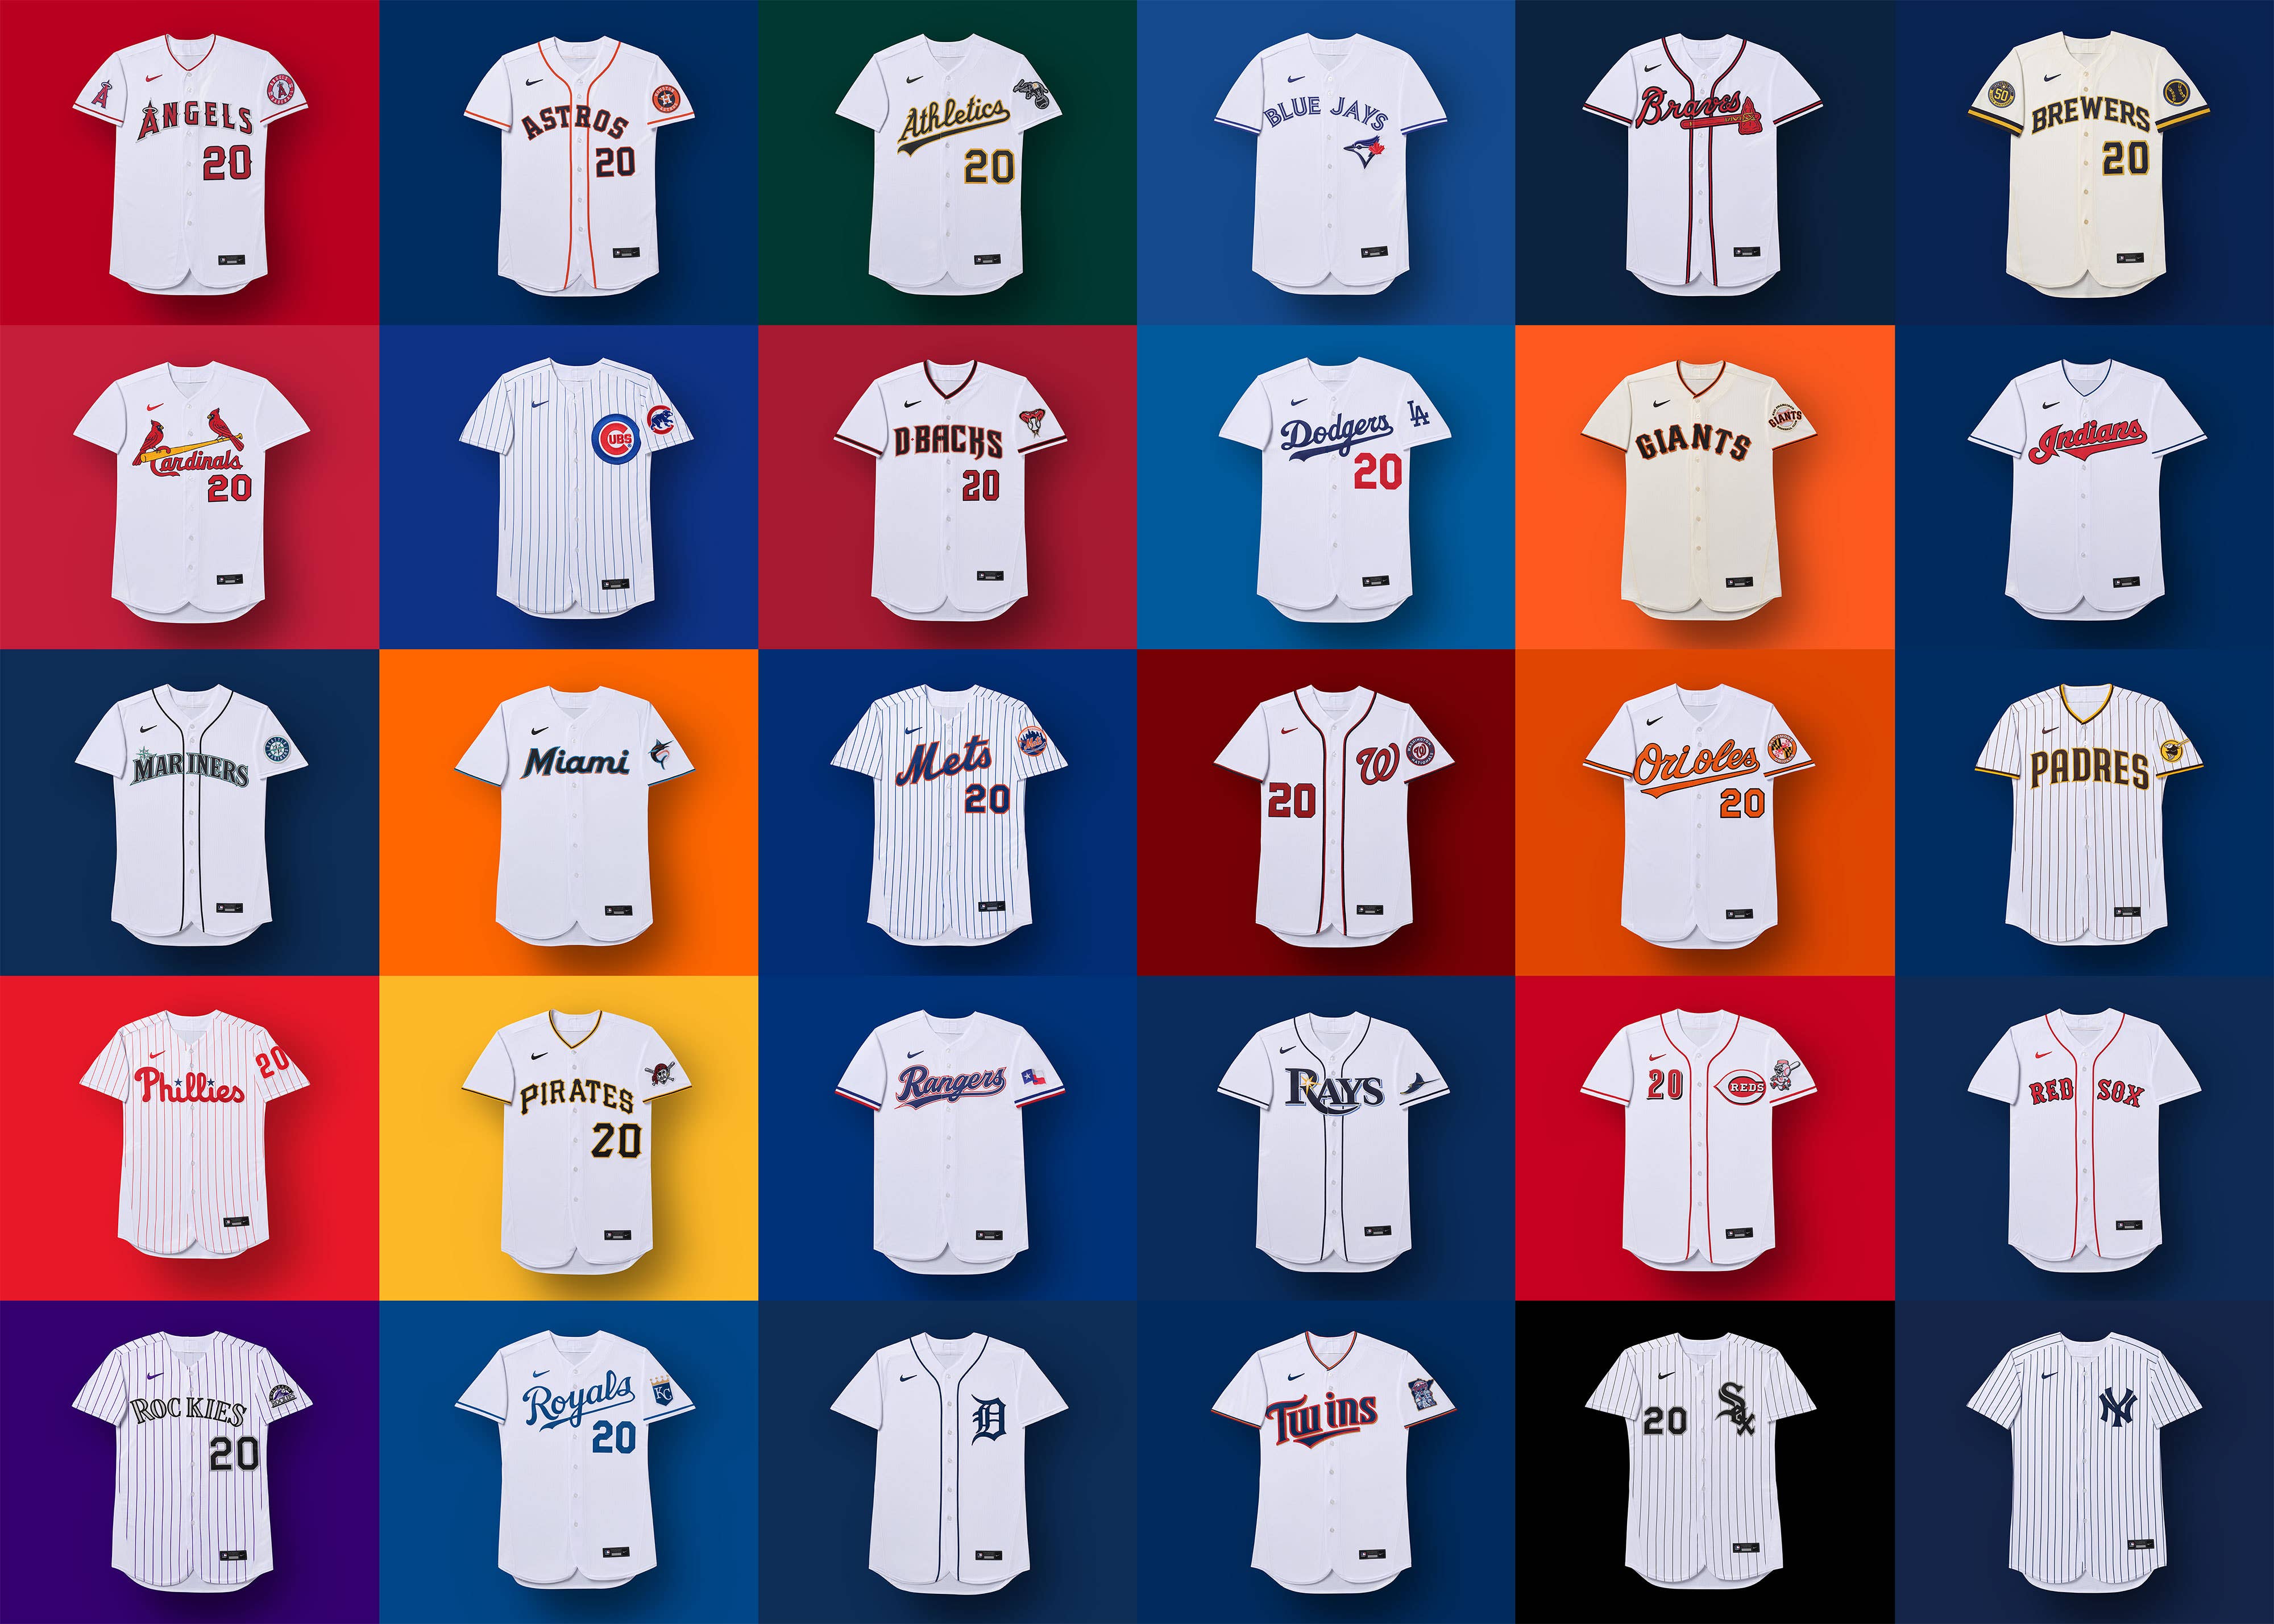 Nike debuts MLB uniform designs for 2020 season with one major